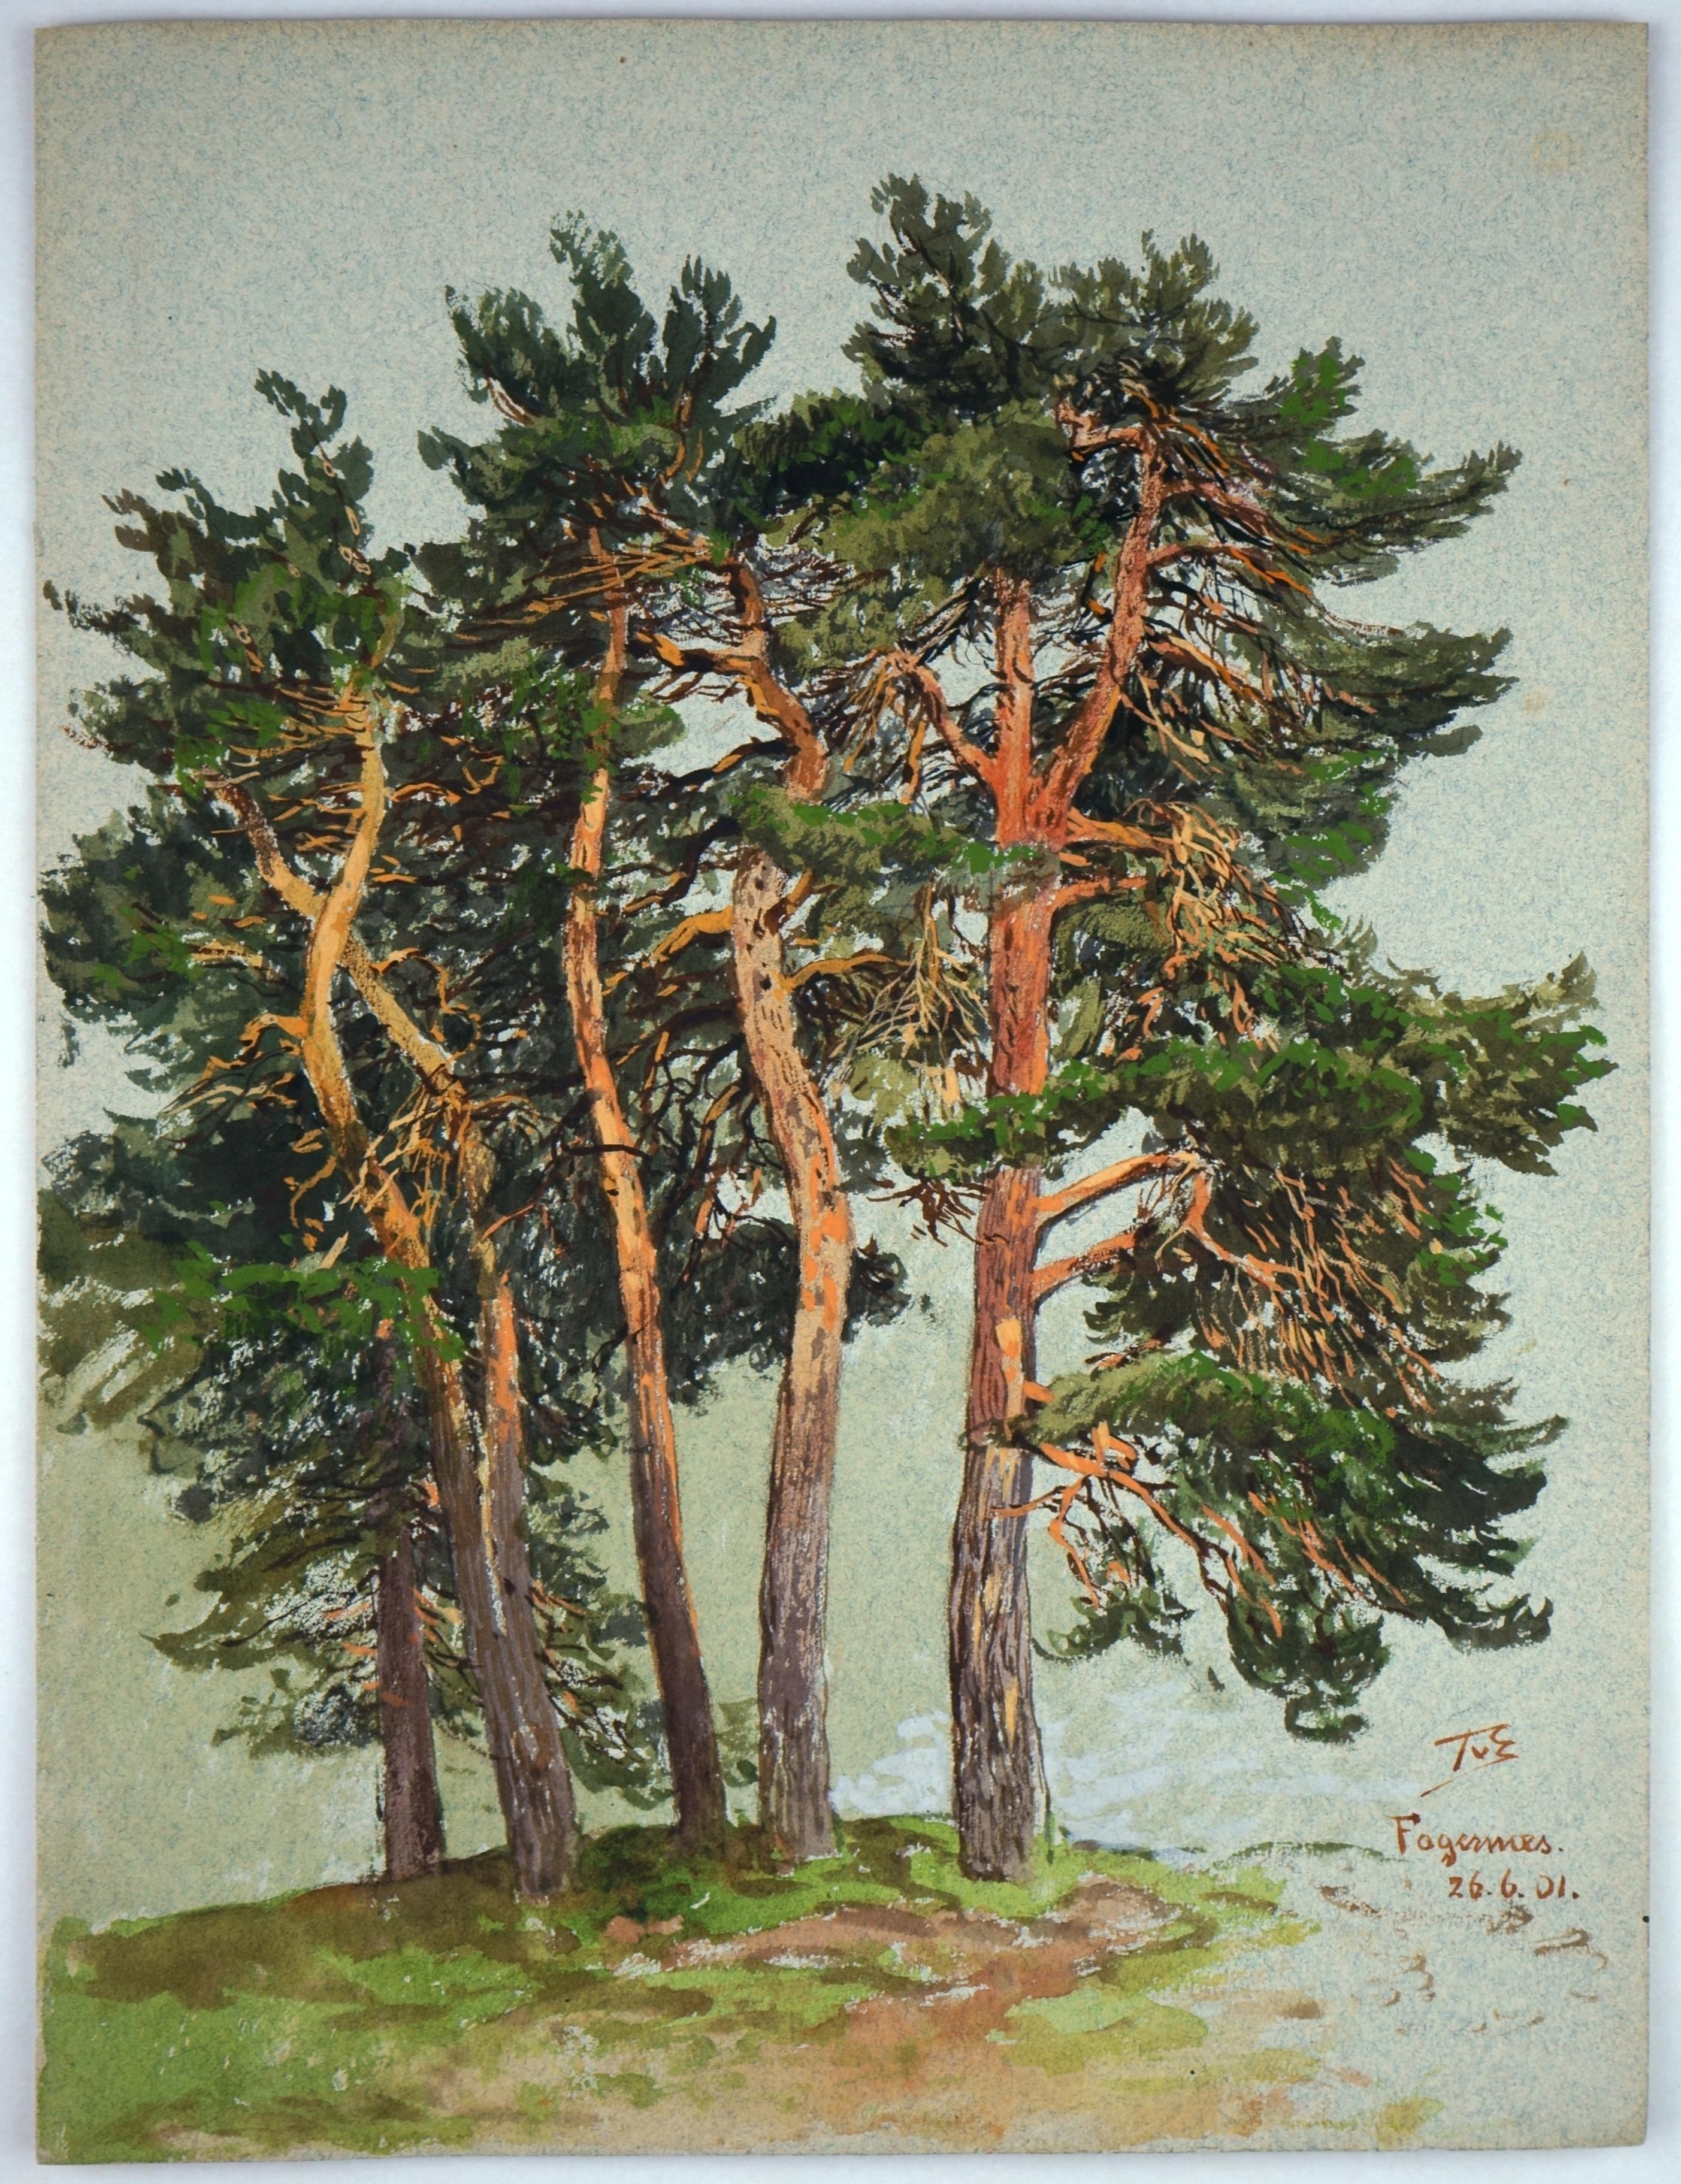 Themistokles von Eckenbrecher Figurative Art - Norwegian Pine Grove - The inner glow of the trees -